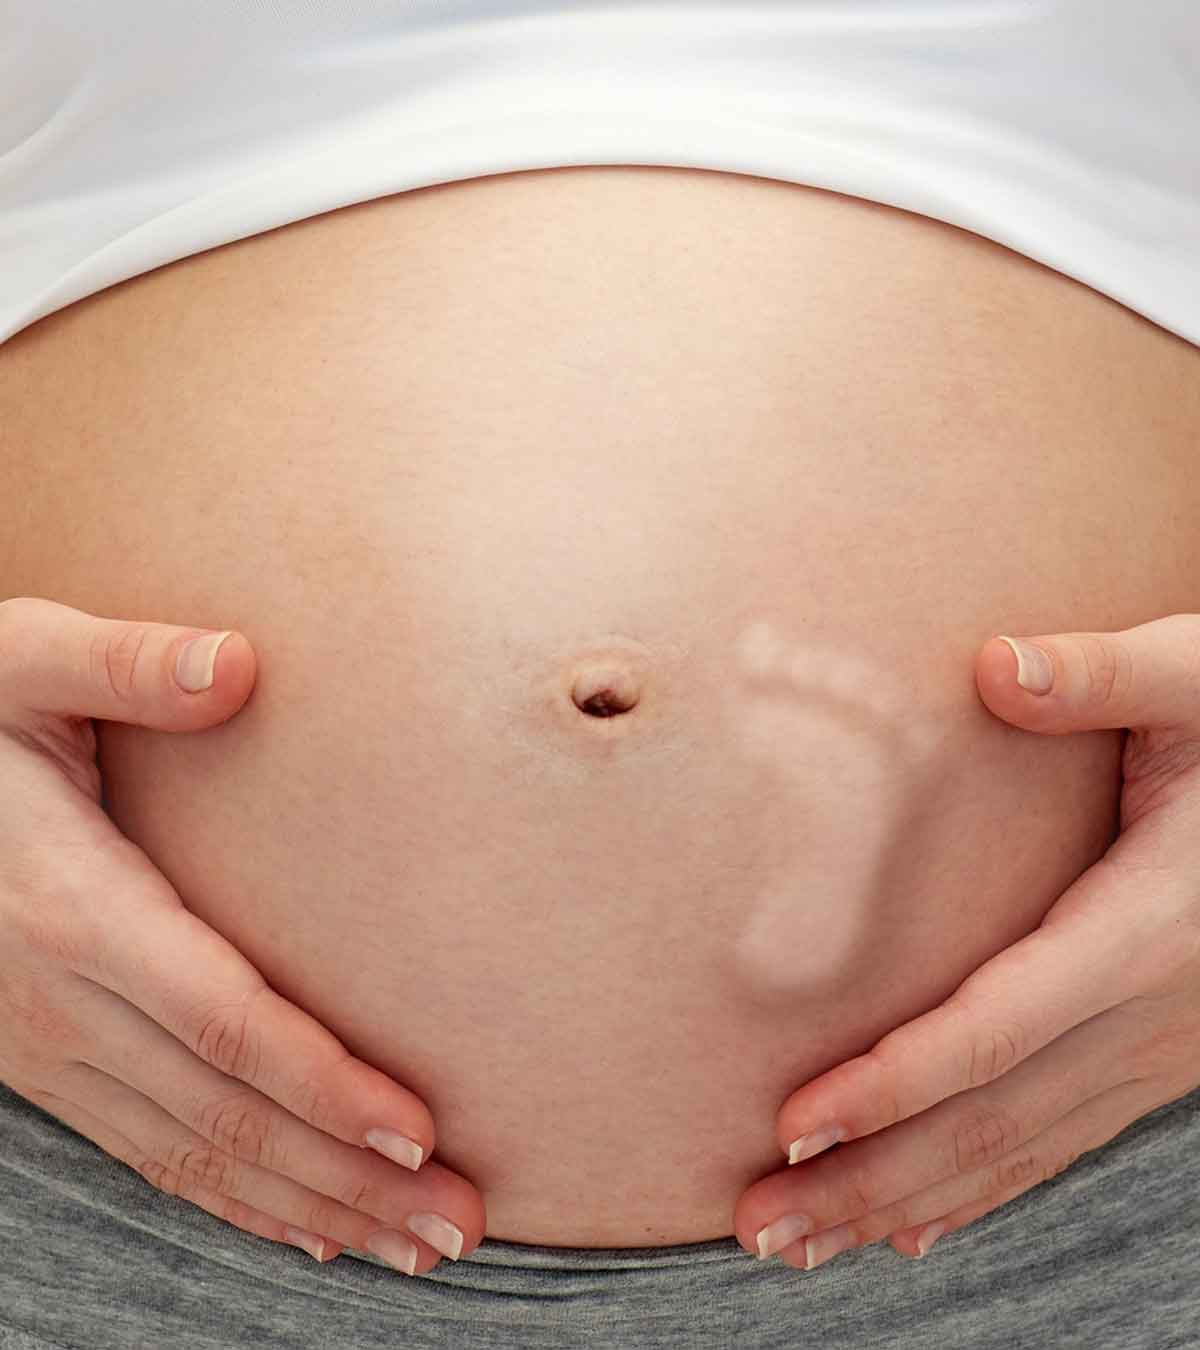 Baby Kick Chart During Pregnancy